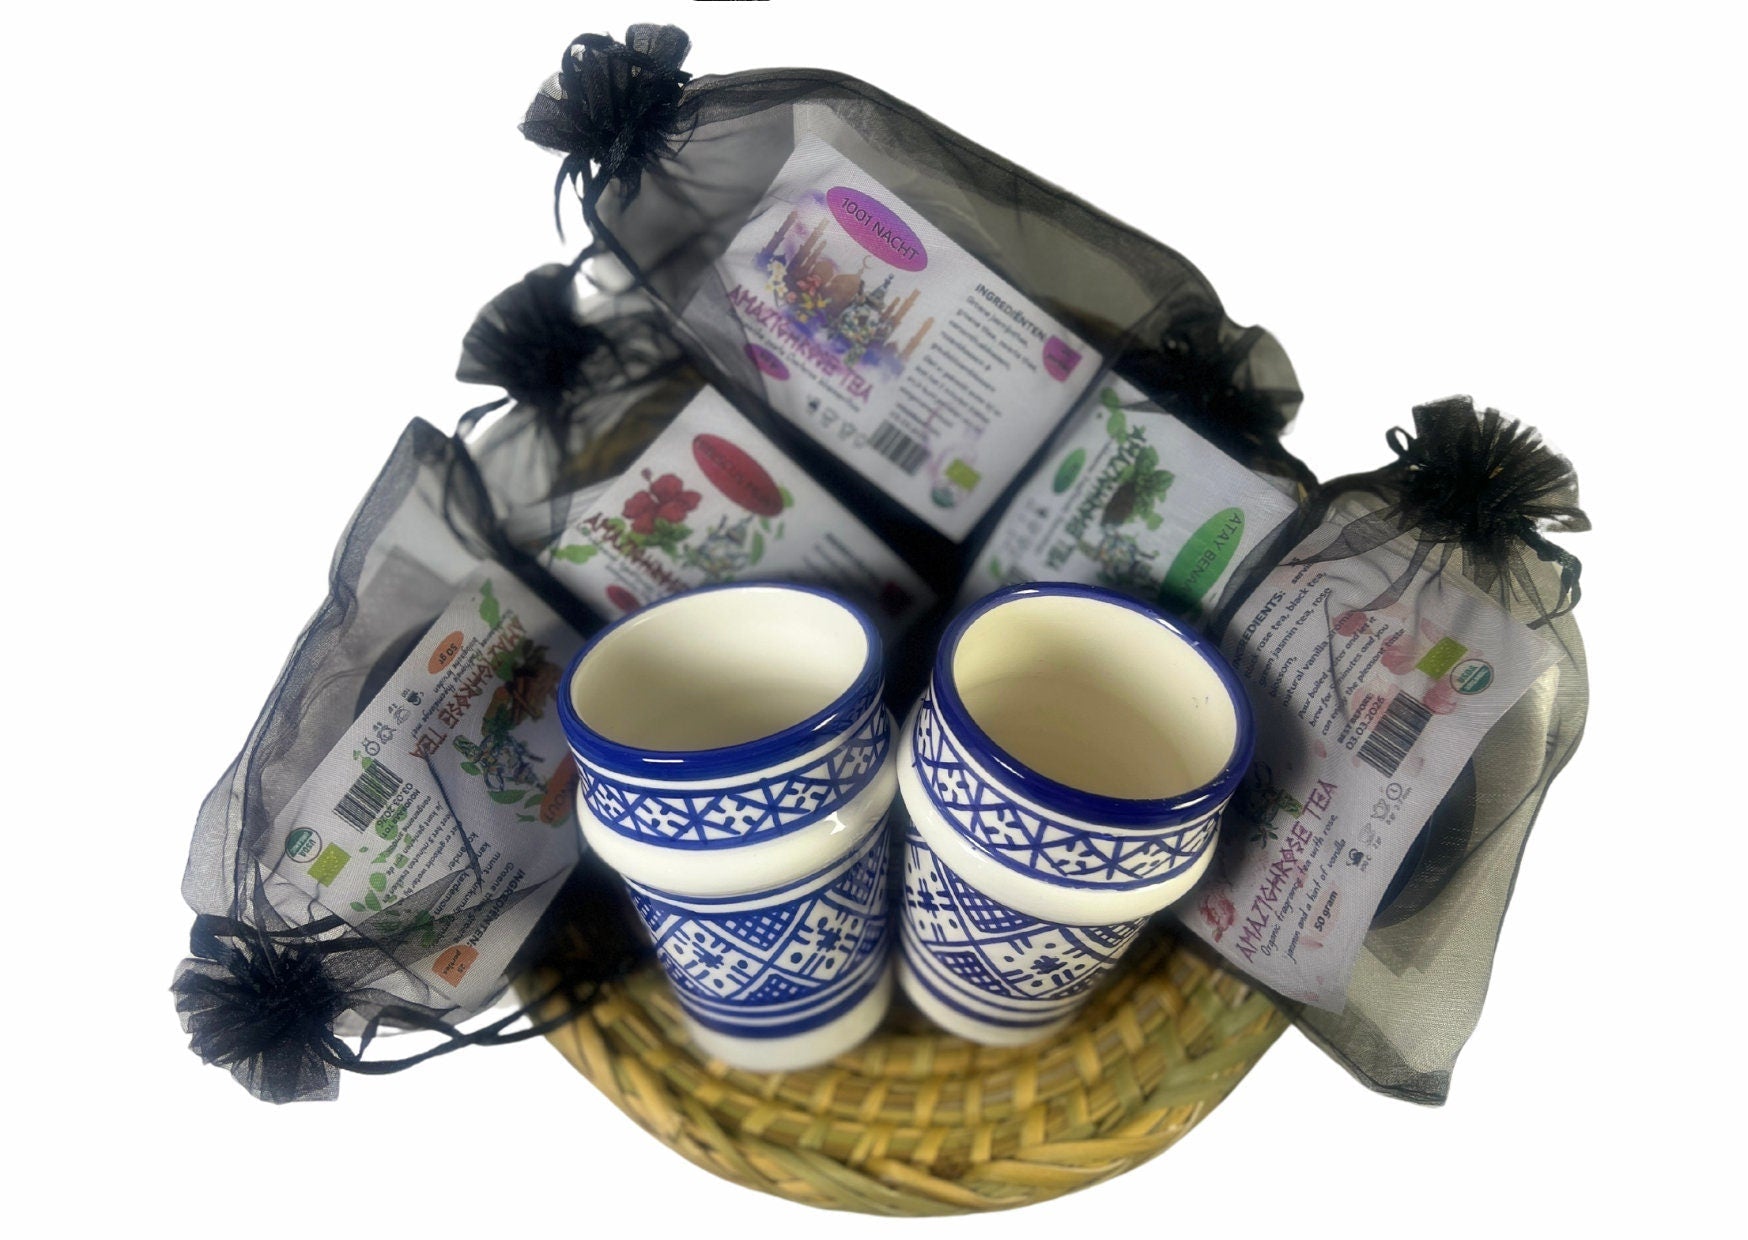 Amazighrose Tea Gift Basket - Tea Lover's Delight & Tea Lover’s Delight Deluxe - Amazighrose